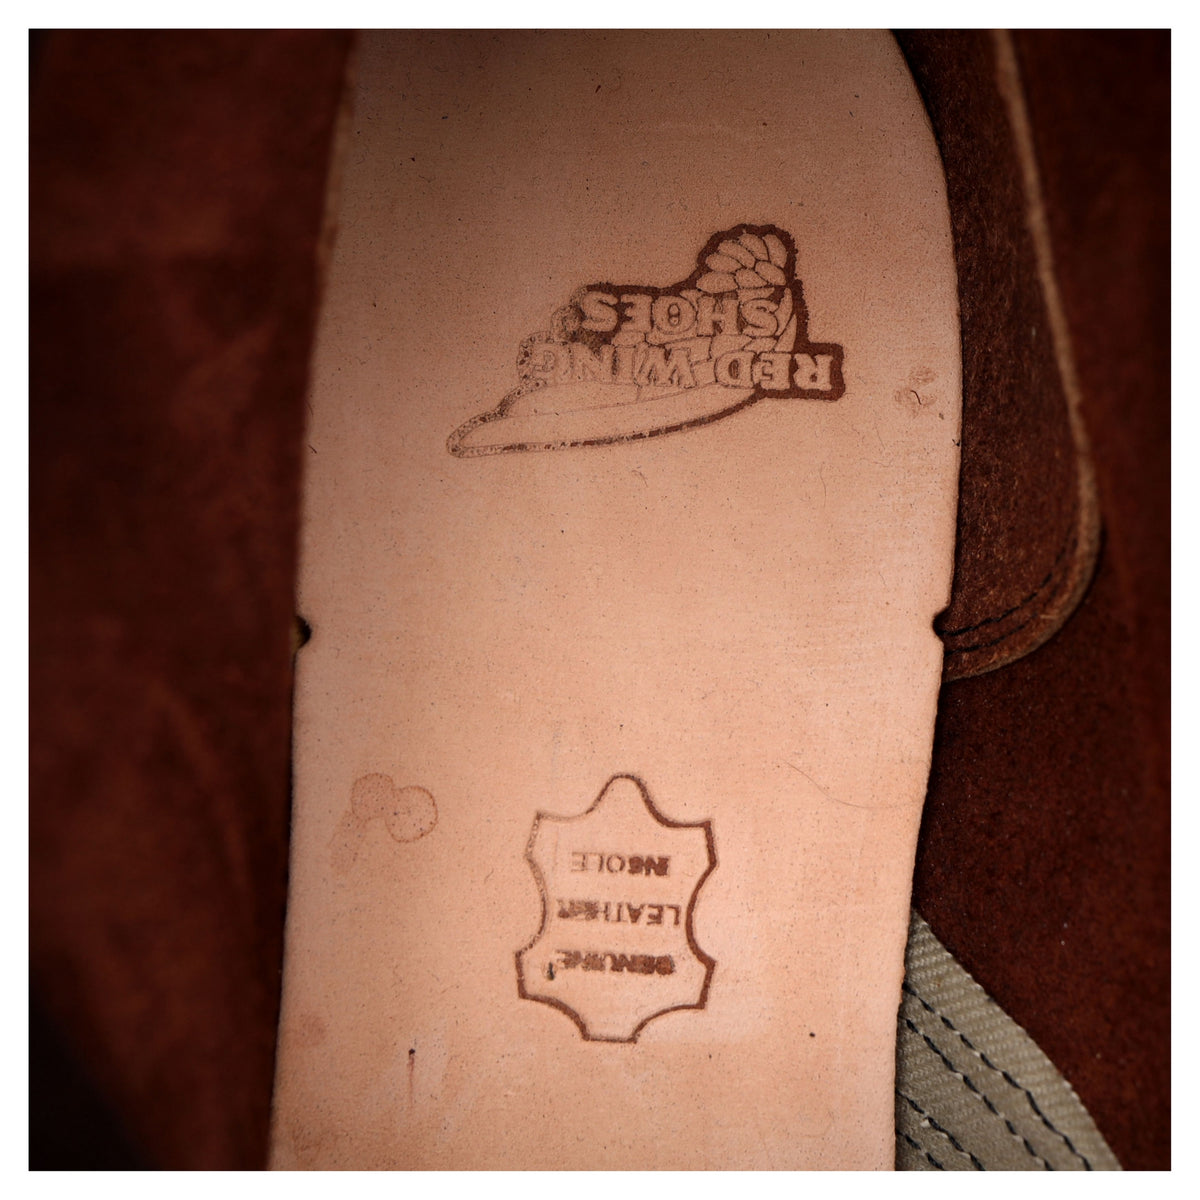 &#39;9215&#39; Brown Leather Chukka Boots UK 9 US 10